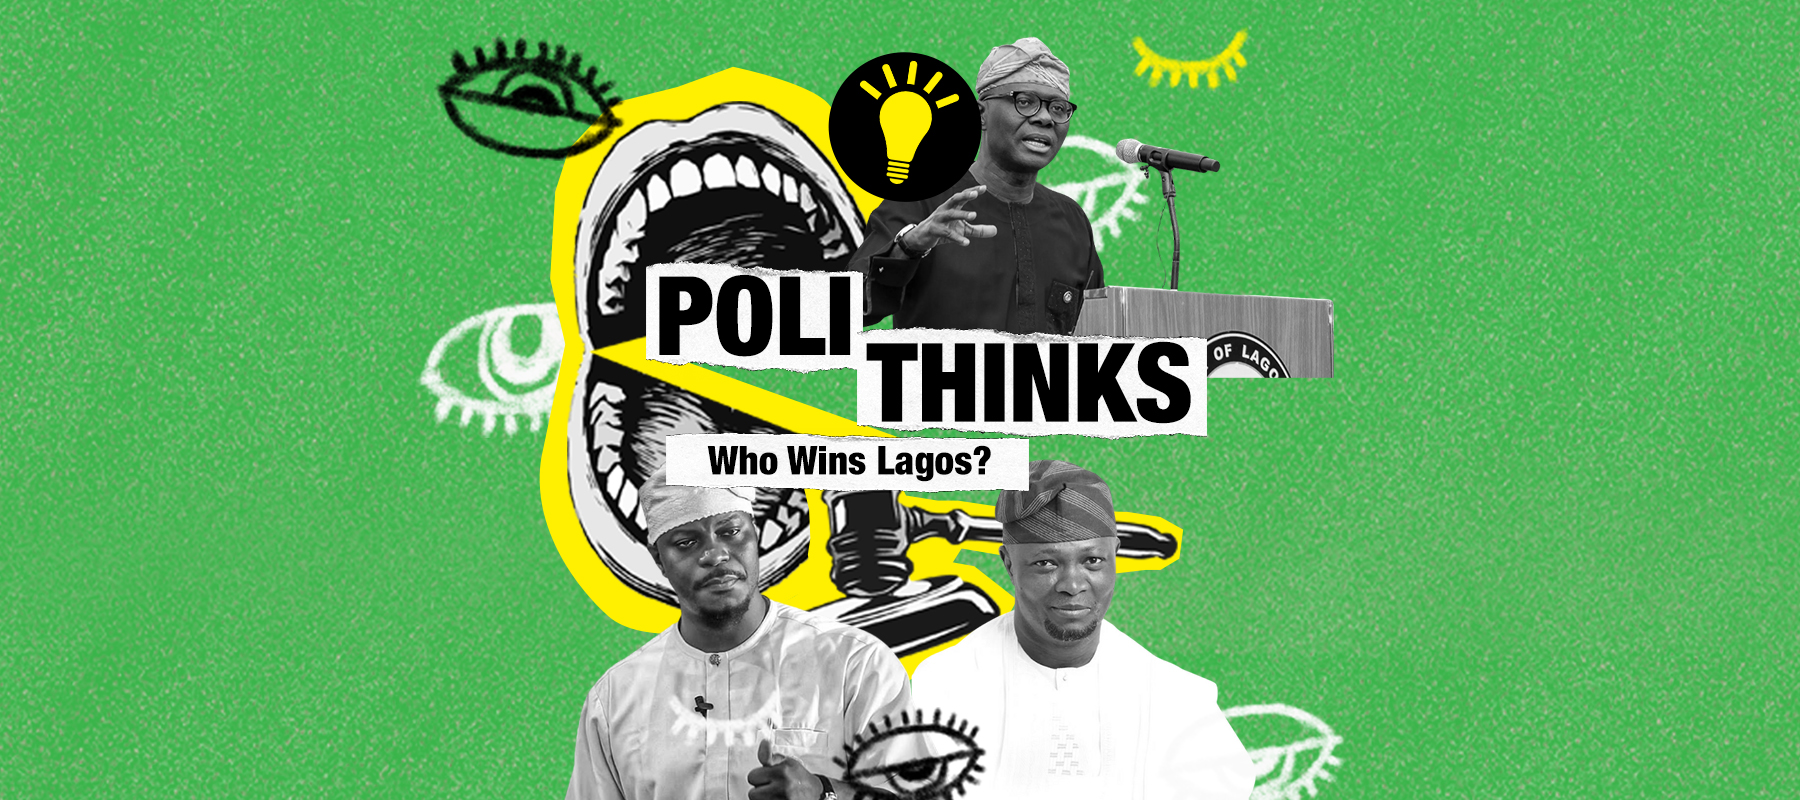 Polithinks: Who wins Lagos?